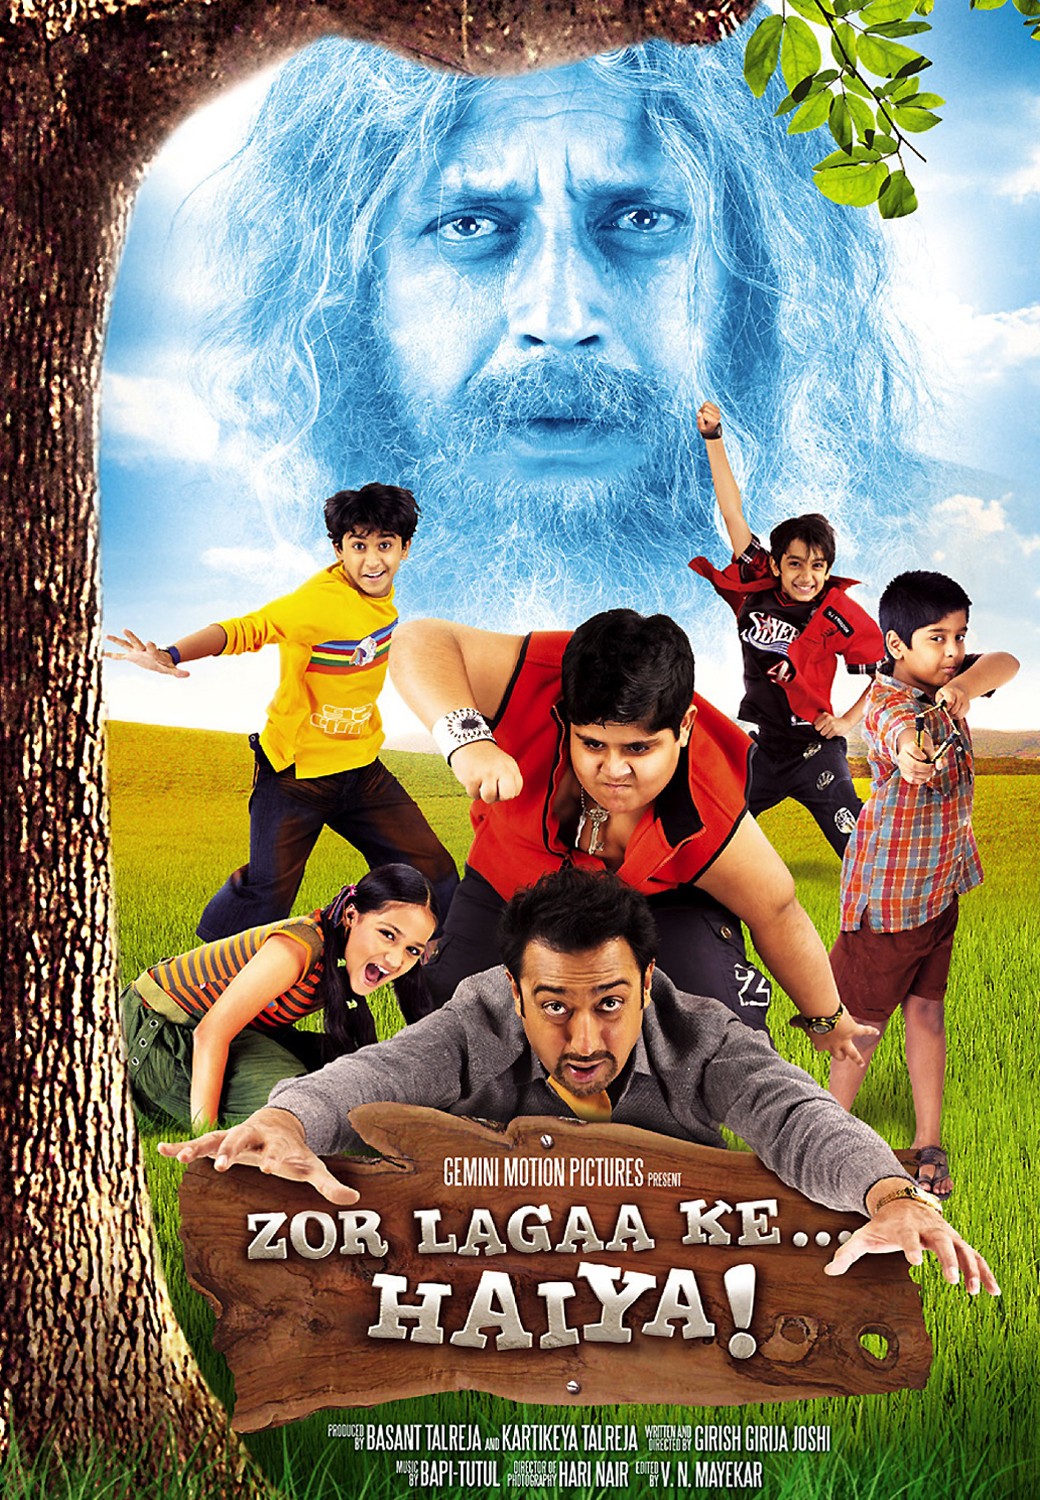 Extra Large Movie Poster Image for Zor Lagaa Ke Haiya 